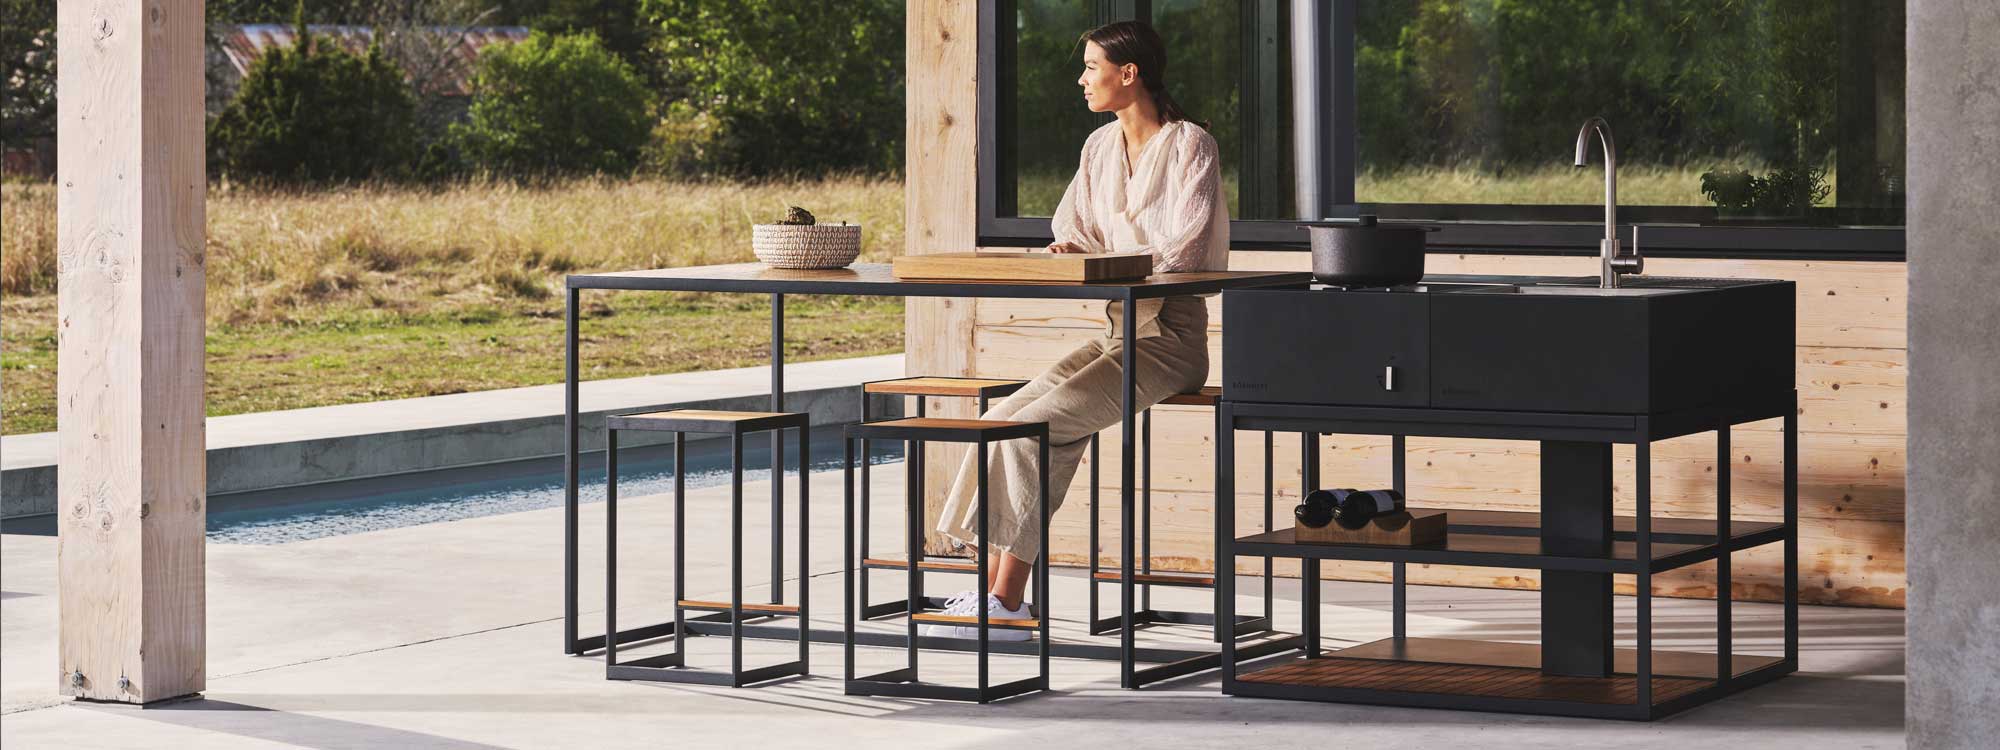 Man sat at Open Bistro outdoor kitchen furniture designed by Broberg & Ridderstråle for Roshults luxury garden furniture company